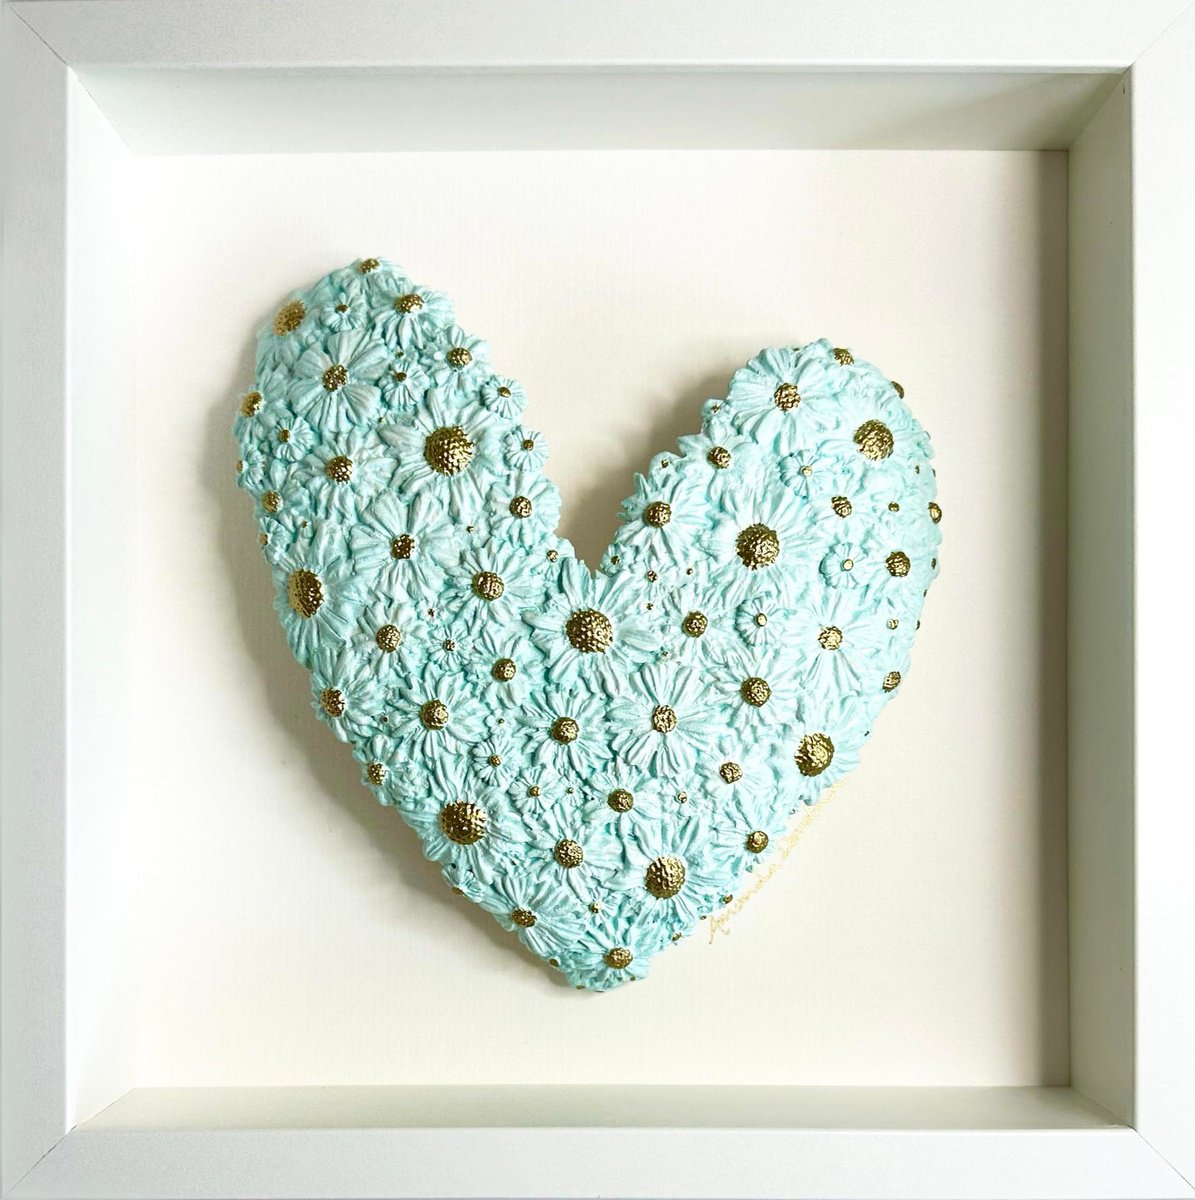 As Fresh as a Daisy (Baby blue polymer clay heart with gold) by Amanda Deadman